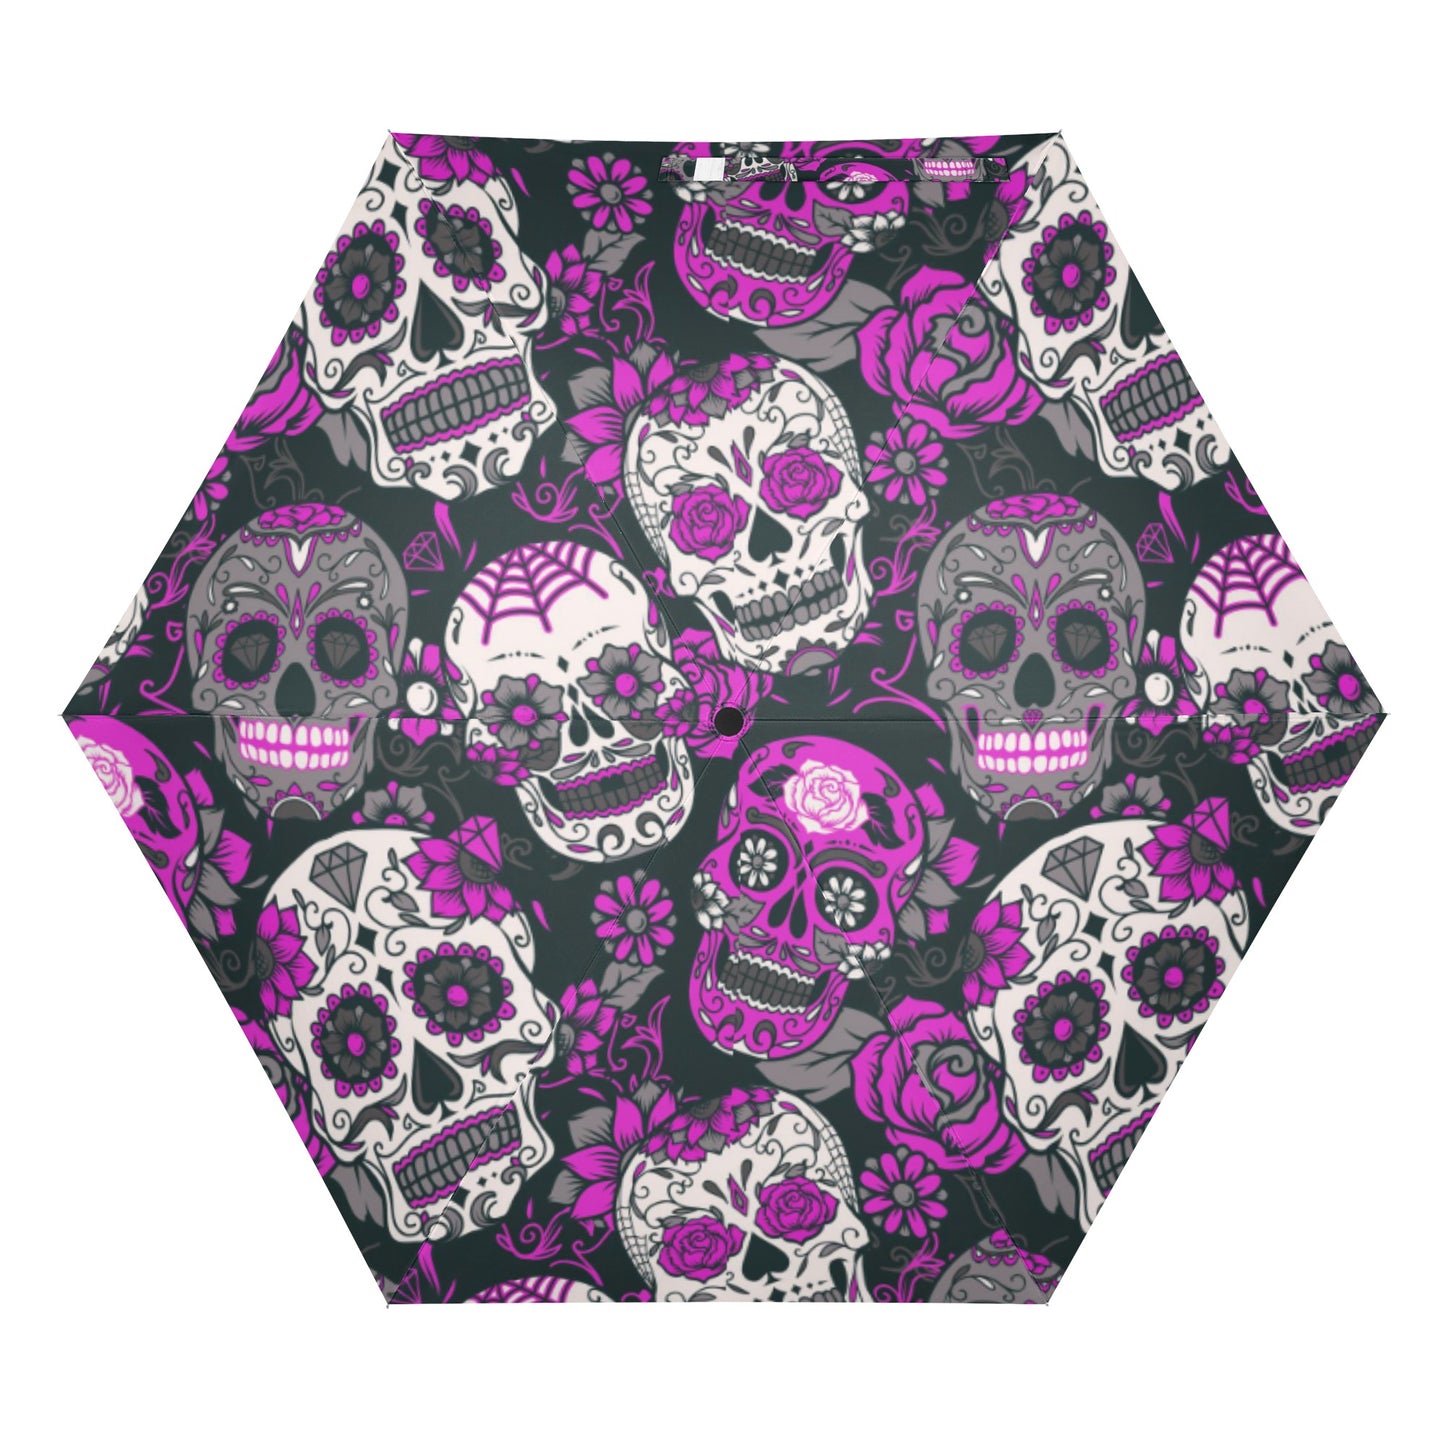 Purple sugar skull Umbrella